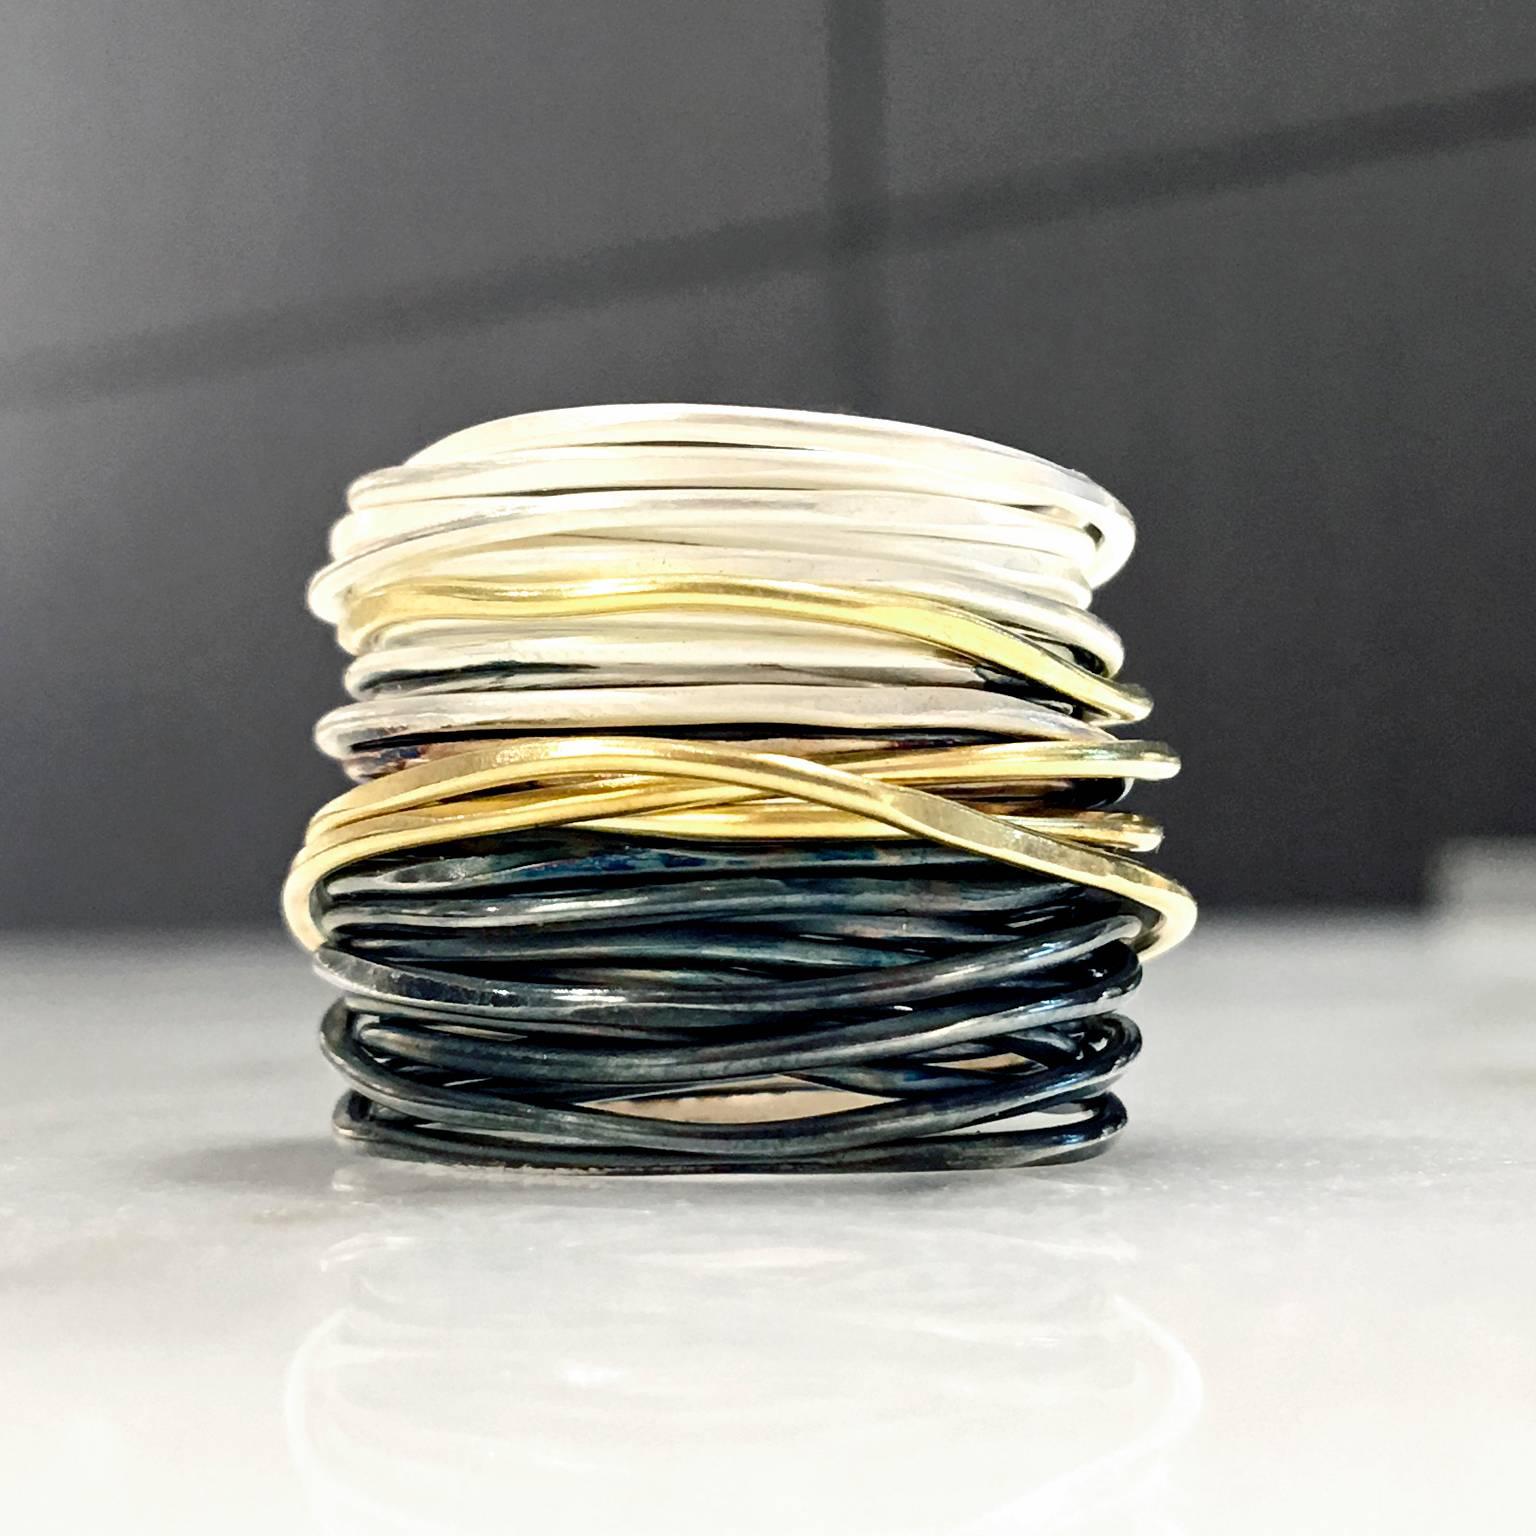 Artisan Disa Allsop Silver and Gold Spaghetti Grande Handmade Mixed Metal Wrap Ring